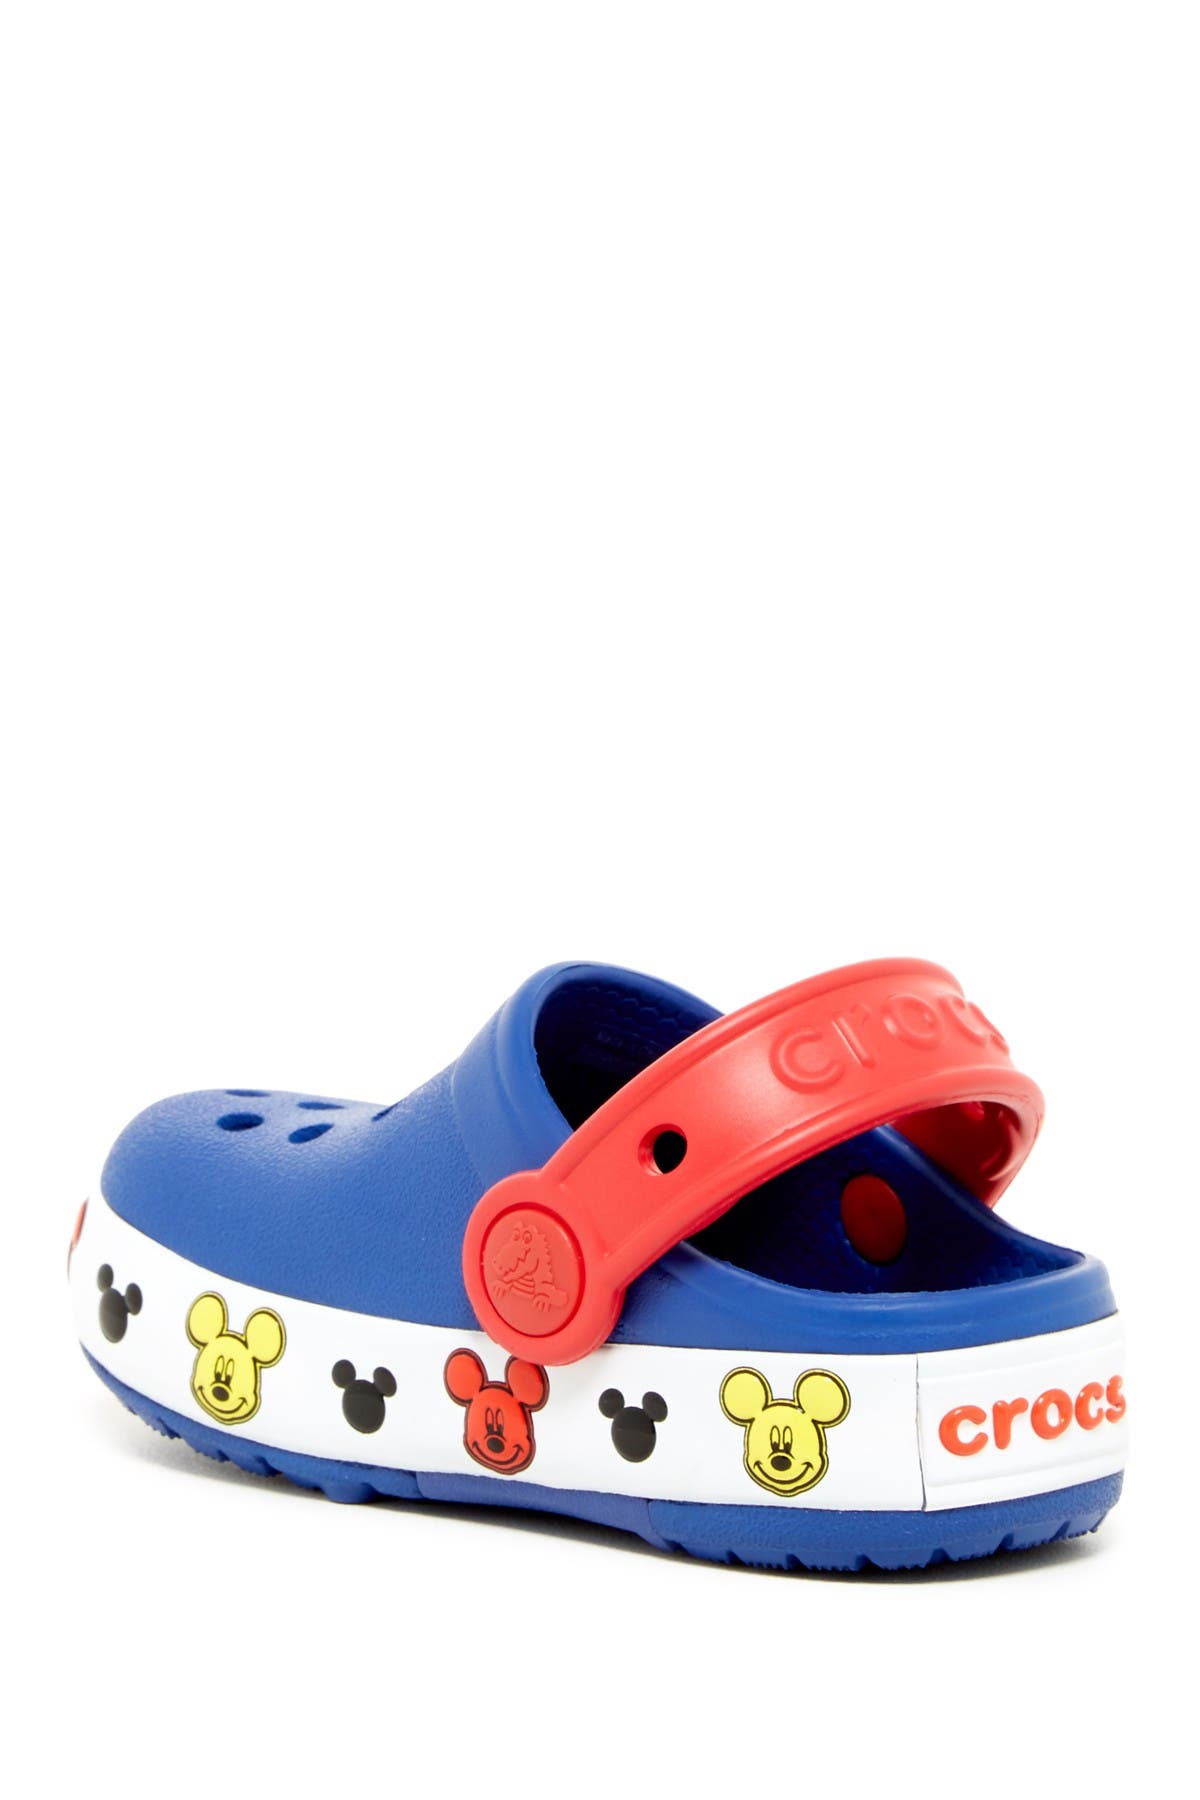 crocs lights mickey